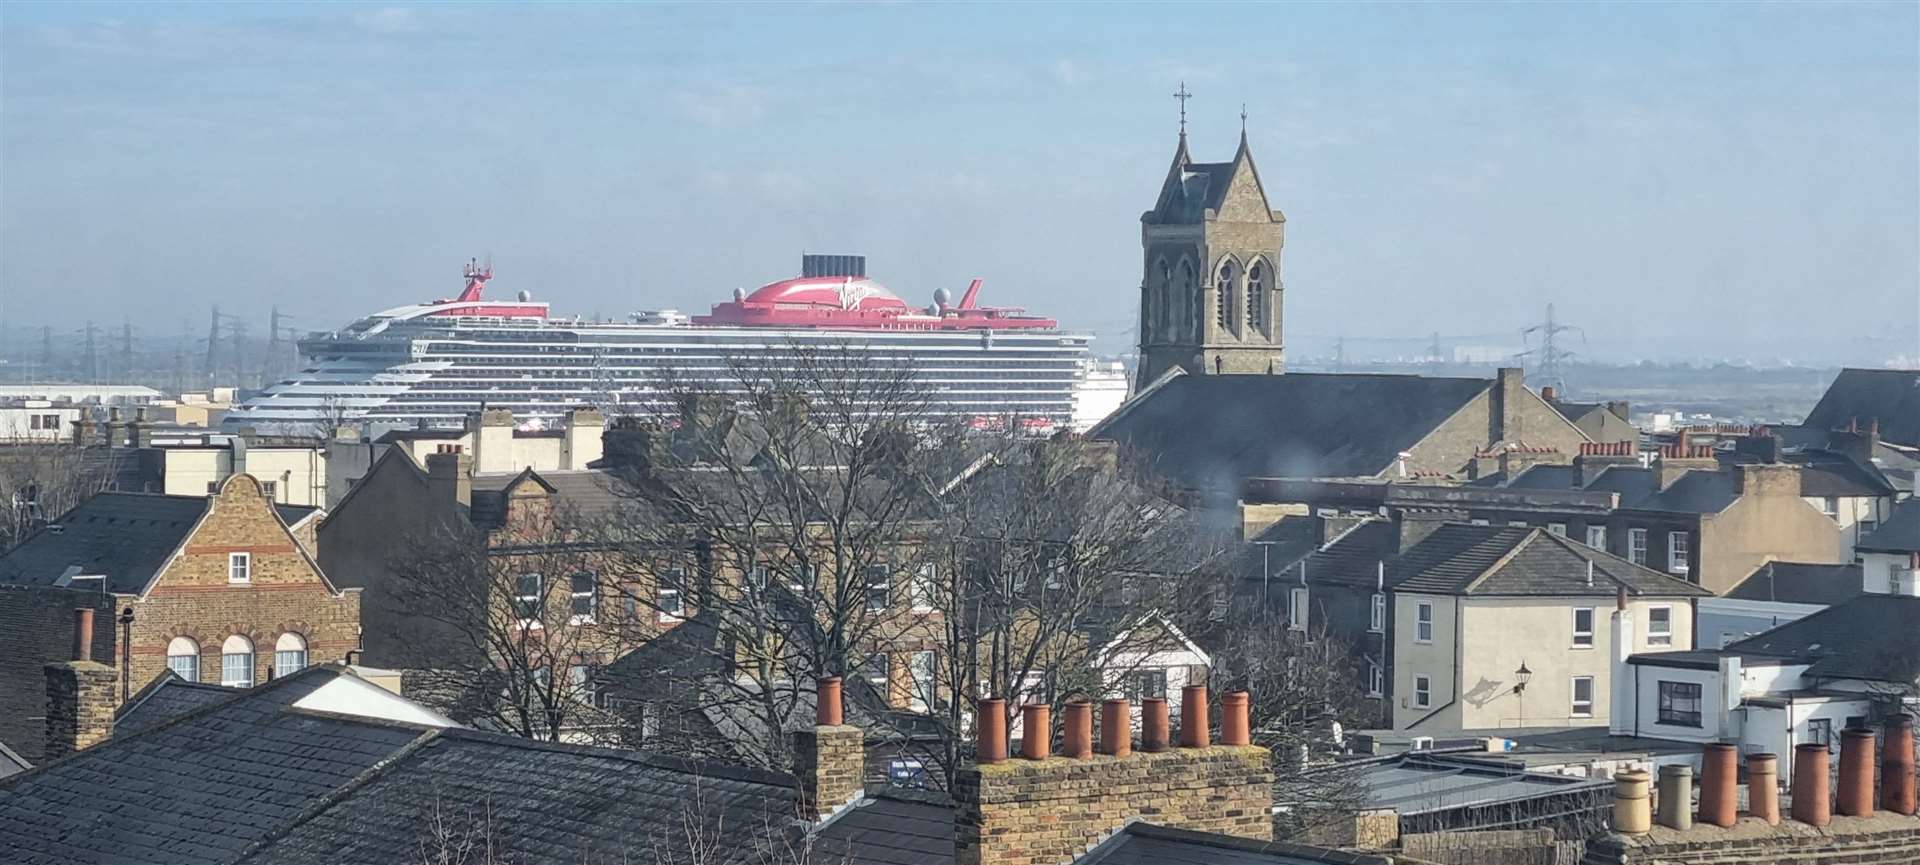 The Valiant Lady, Virgin's latest cruise ship, dwarfs the skyline of Gravesend